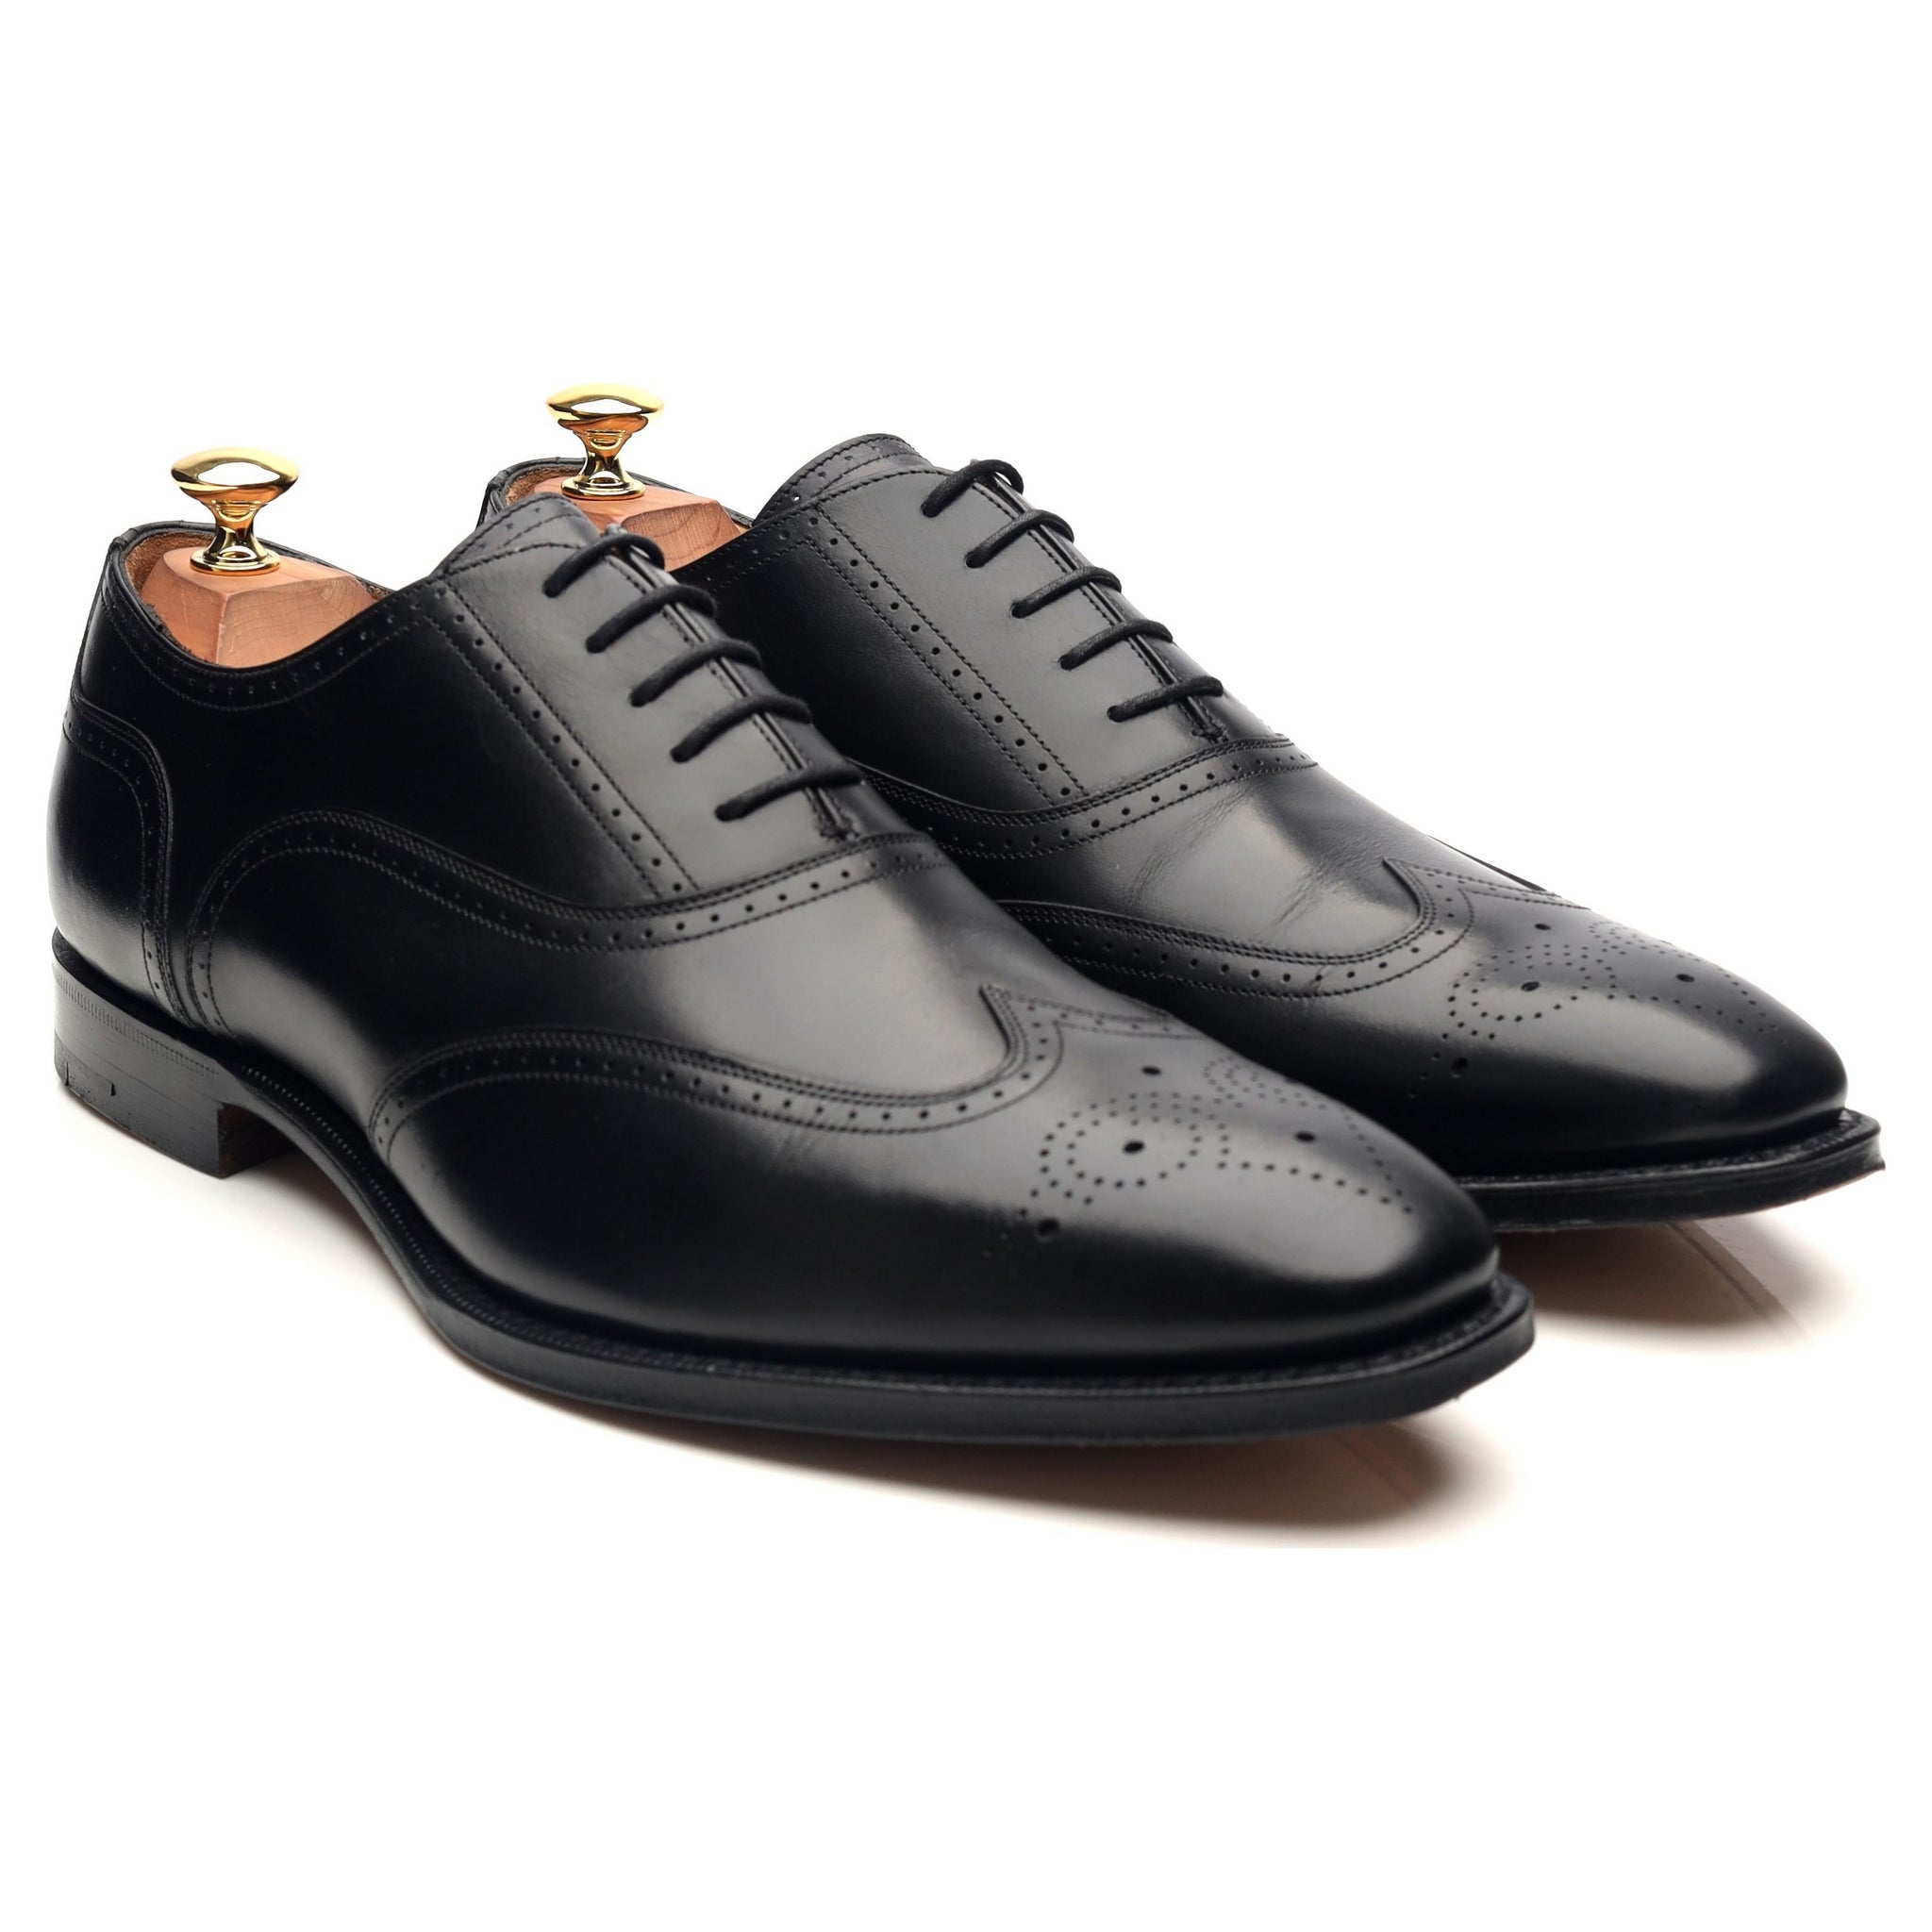 Walton' Black Leather Brogues UK 9.5 G - Abbot's Shoes